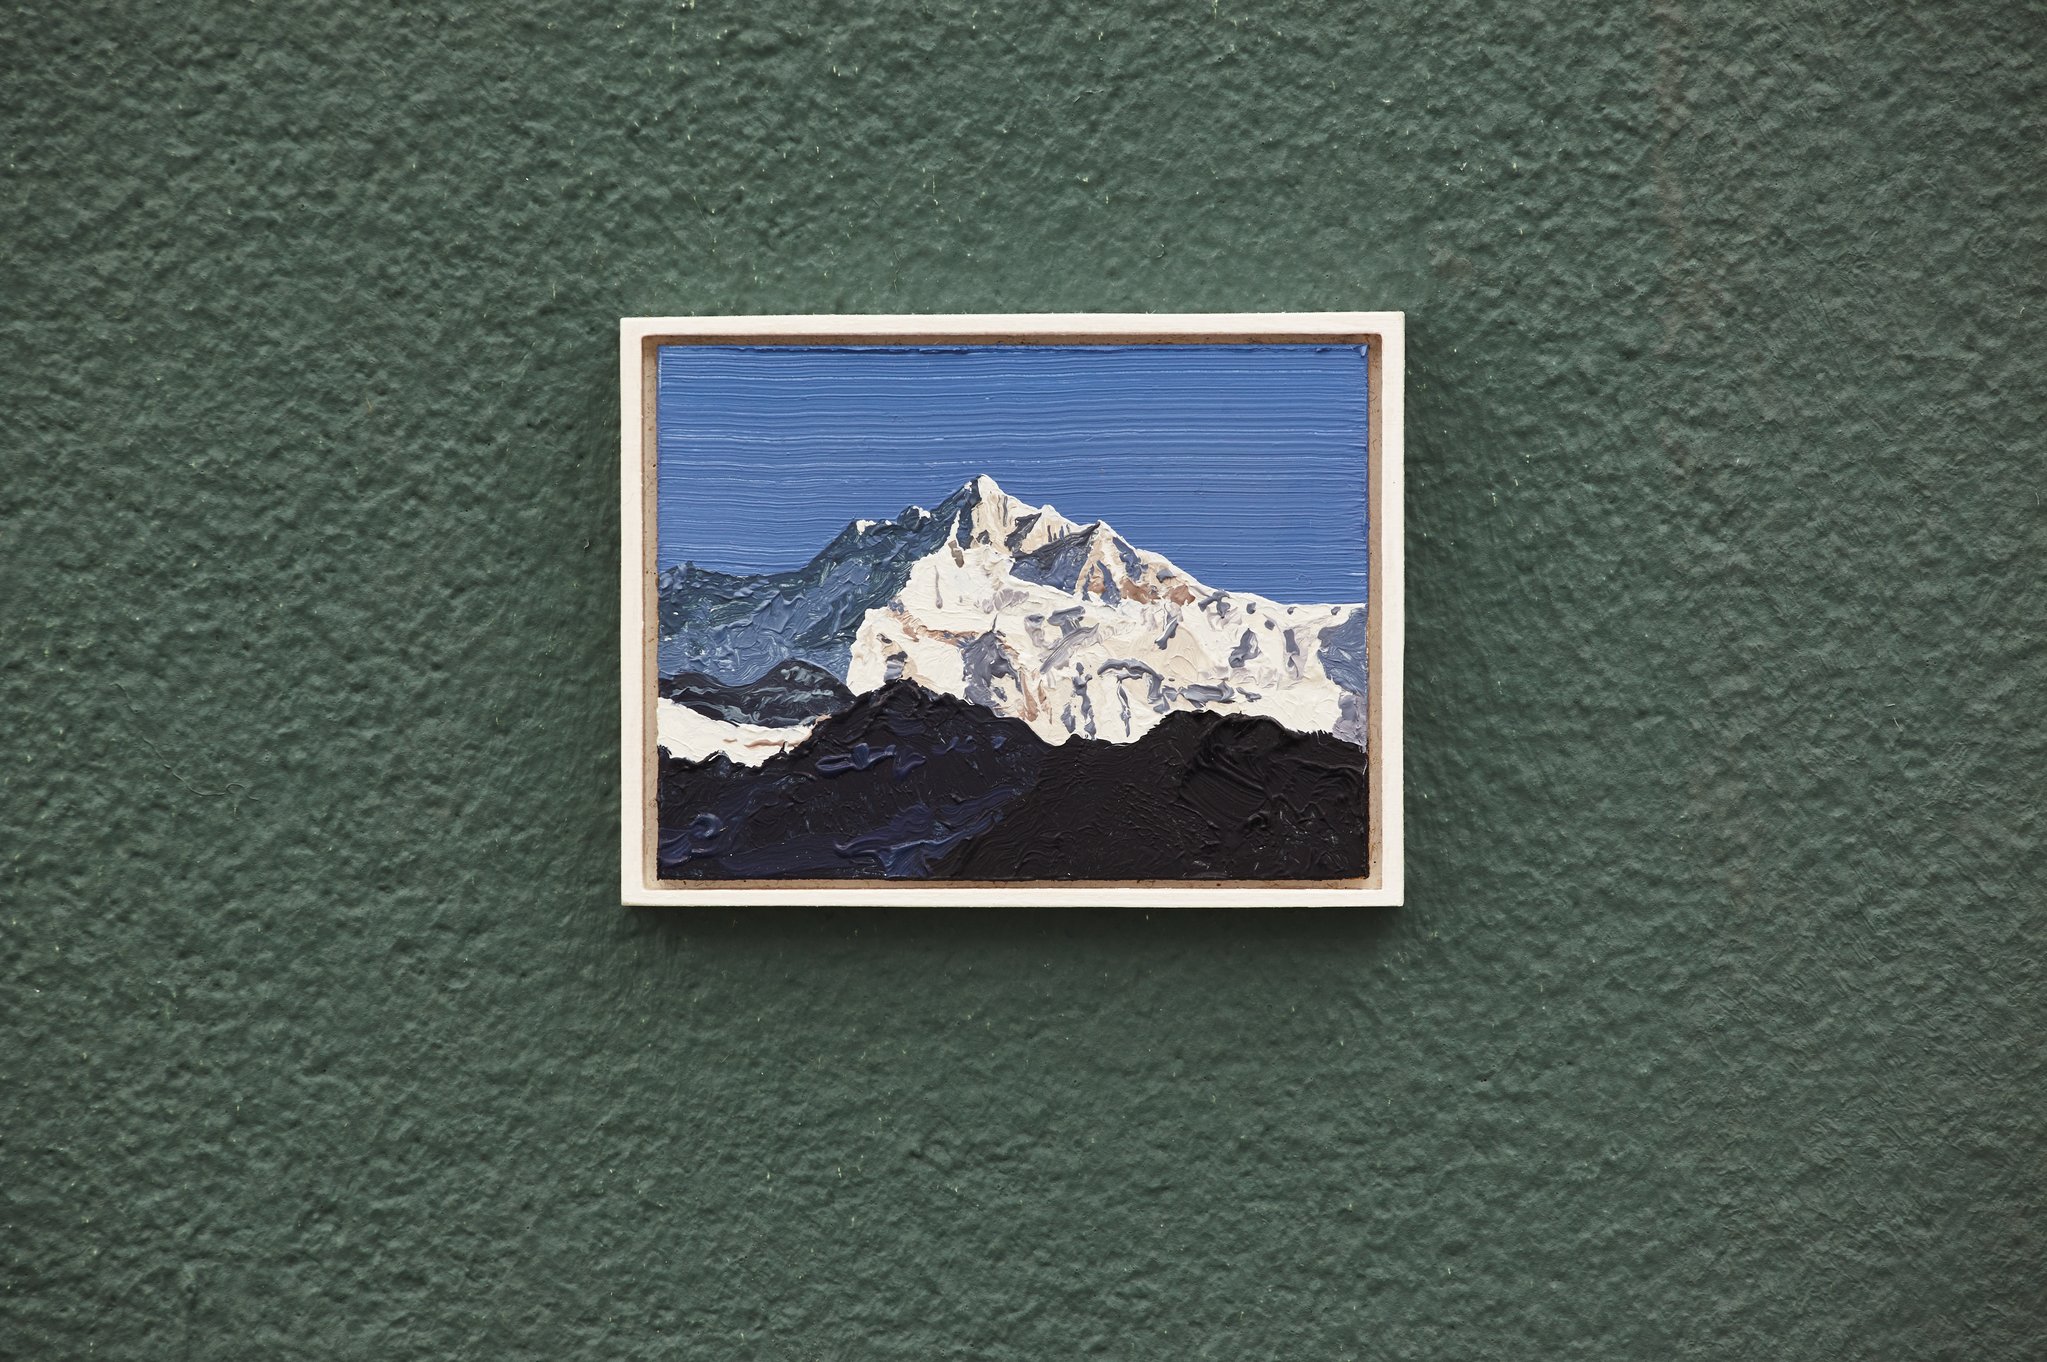 Felix Rehfeld, Installation views from "540 Berge."